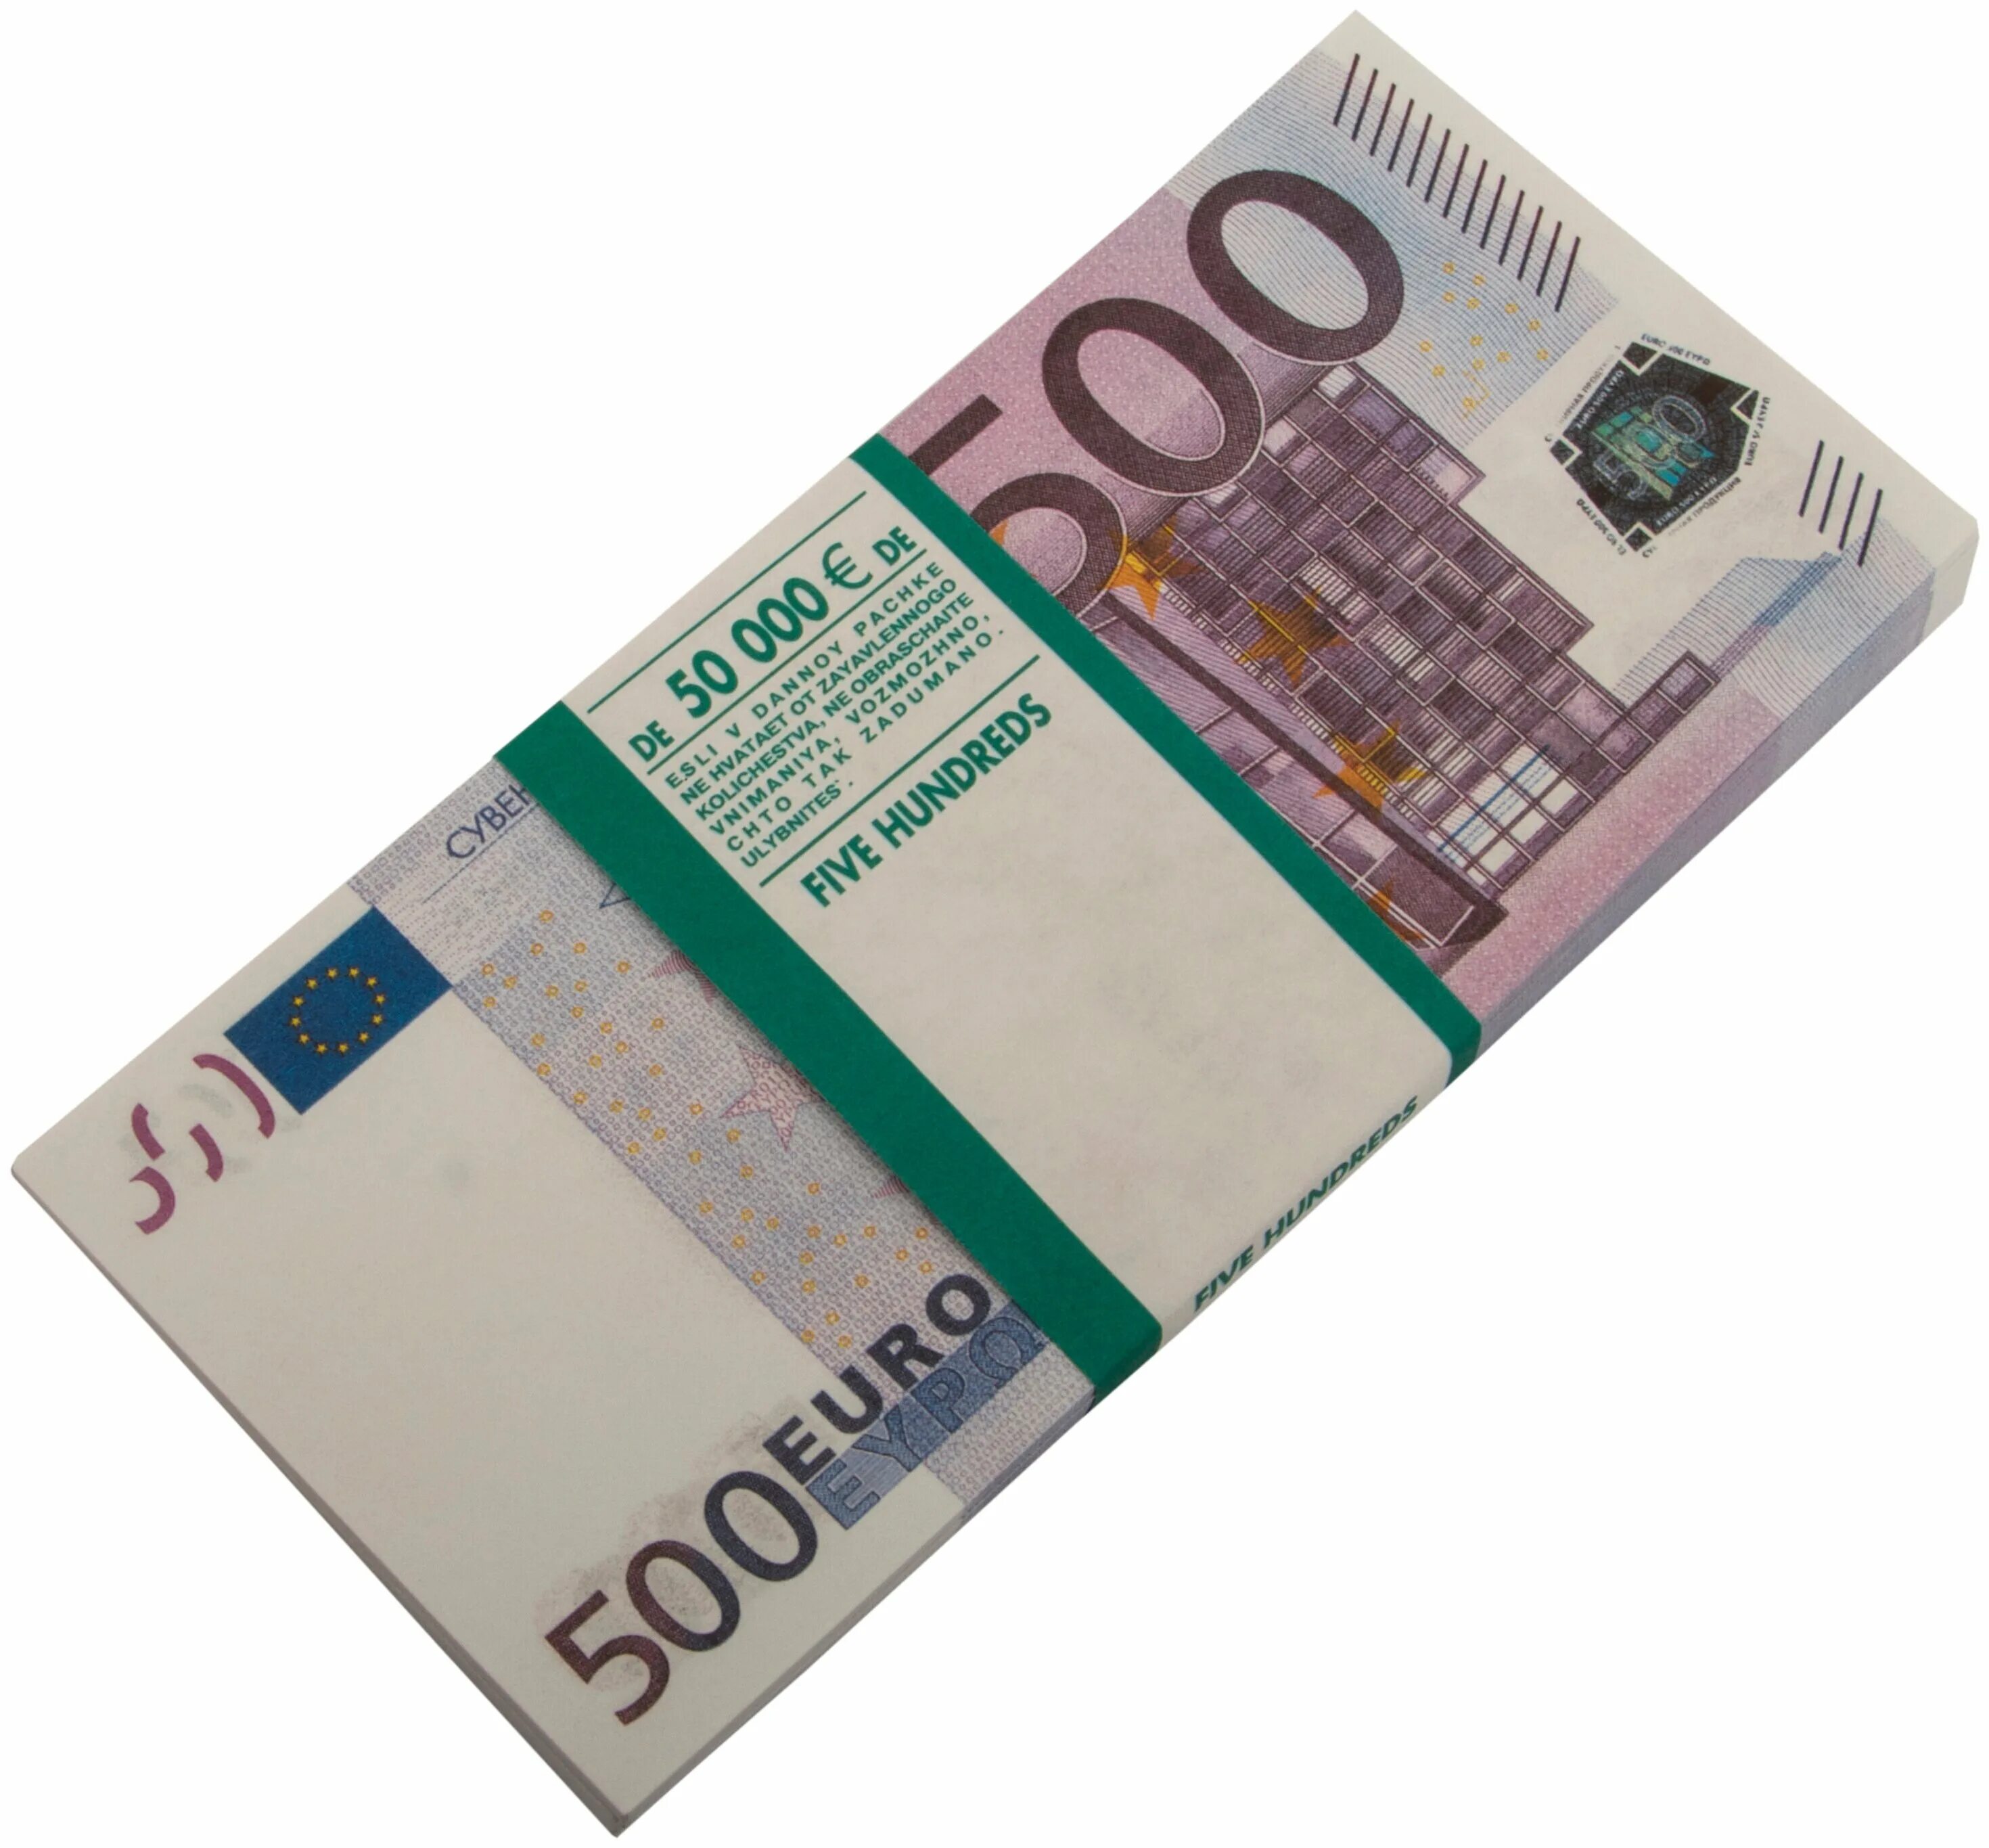 500 евро купить. 500 Евро пачка. Пачка купюр евро. Пачка денег 500 евро. 500 Евро банк приколов.